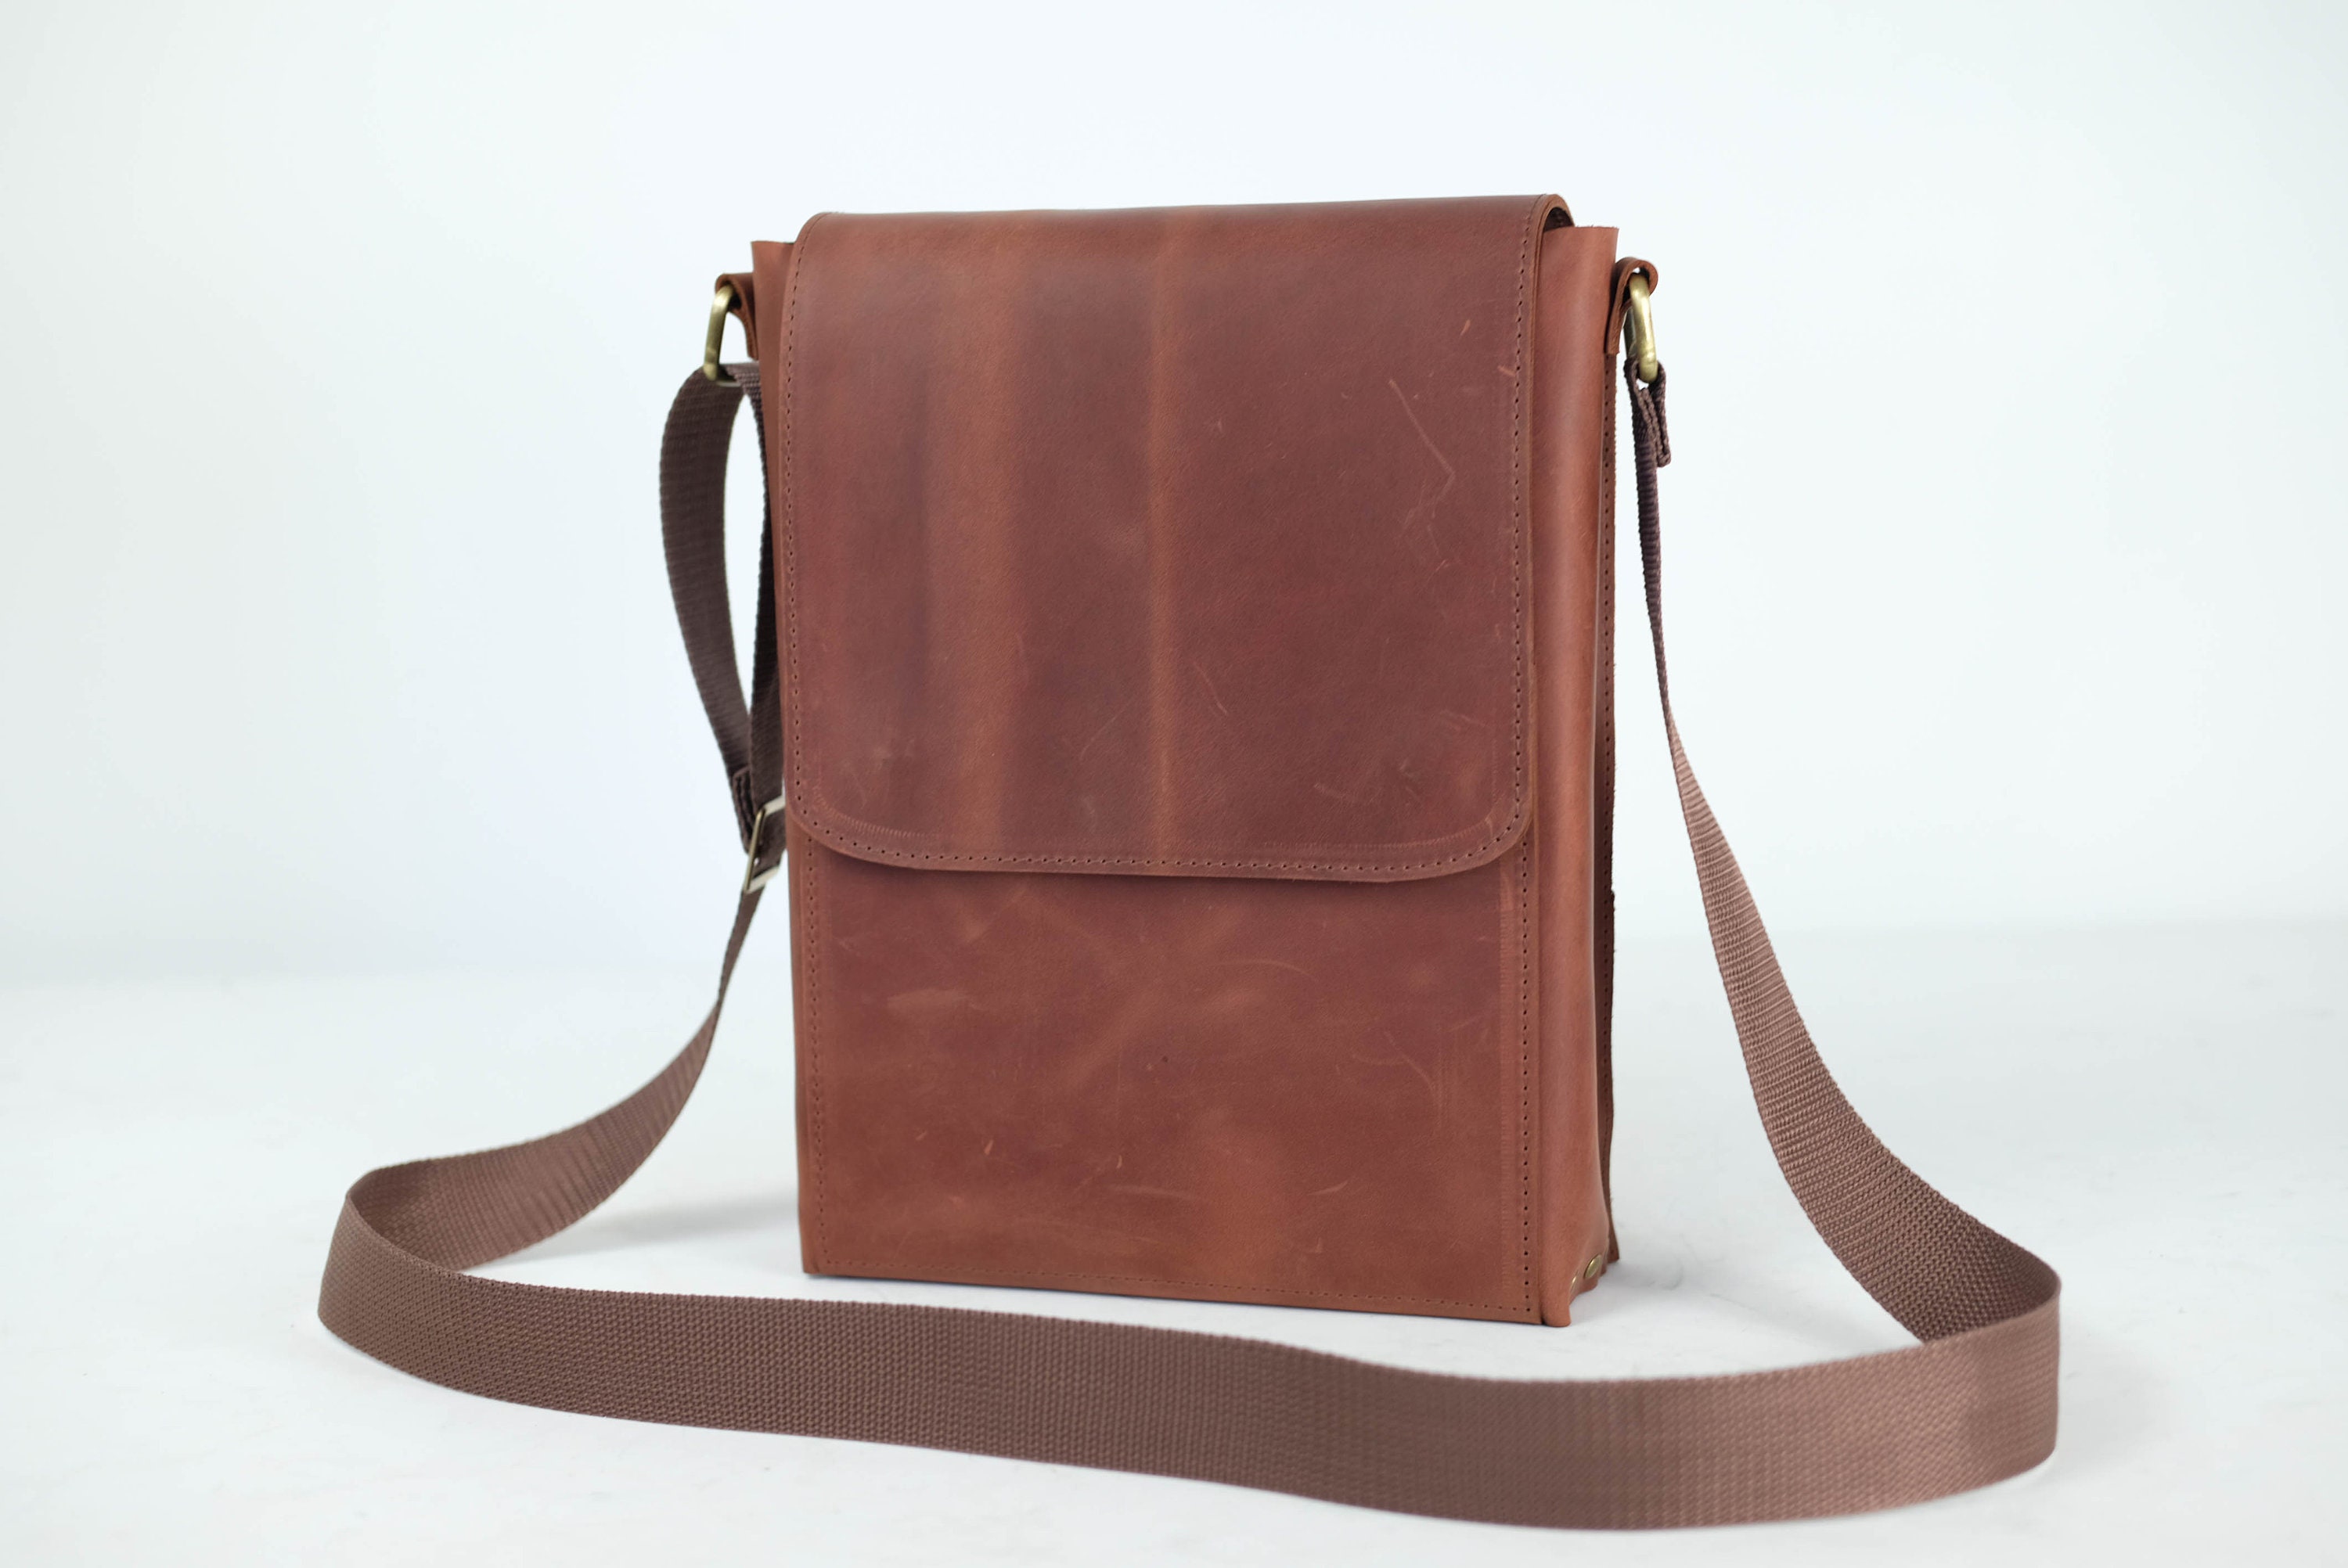 Personalized leather bag for men shoulder purse crossbody | Etsy